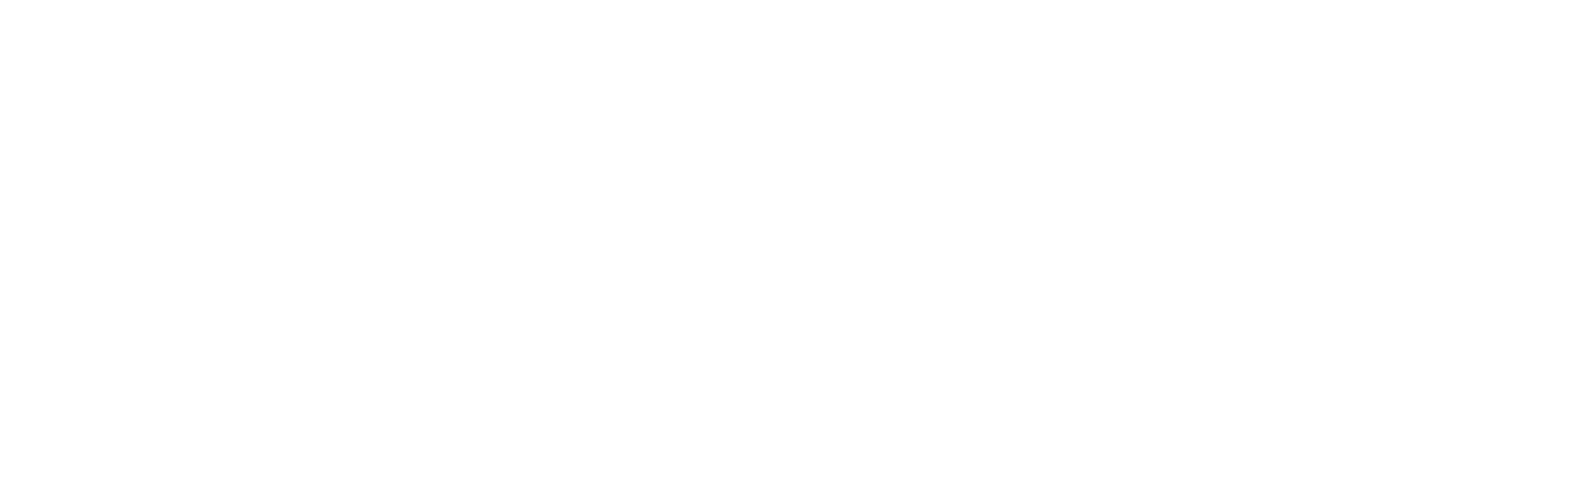 1stdibs.Com logo grand pour les fonds sombres (PNG transparent)